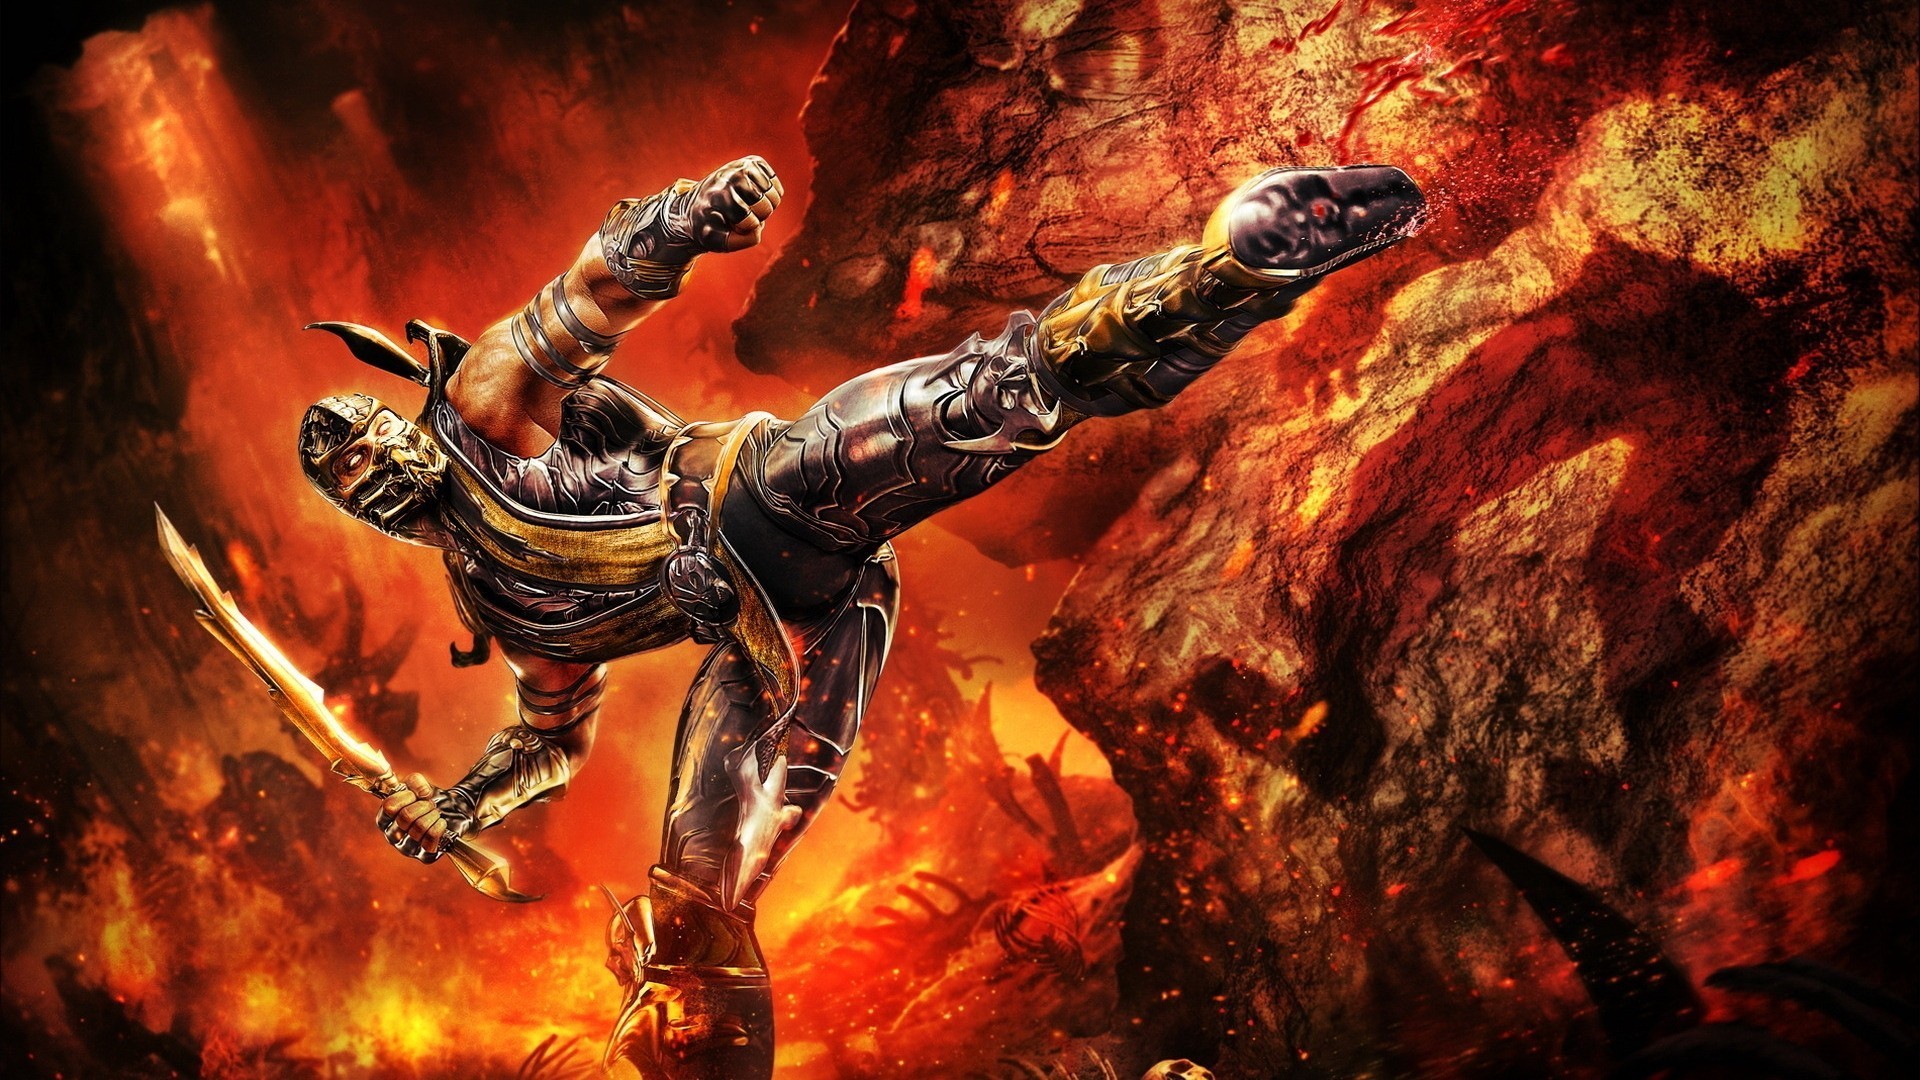 Digital Art Artwork Fantasy Art Video Games Mortal Kombat Scorpion Character Scorpion Character Fire 1920x1080